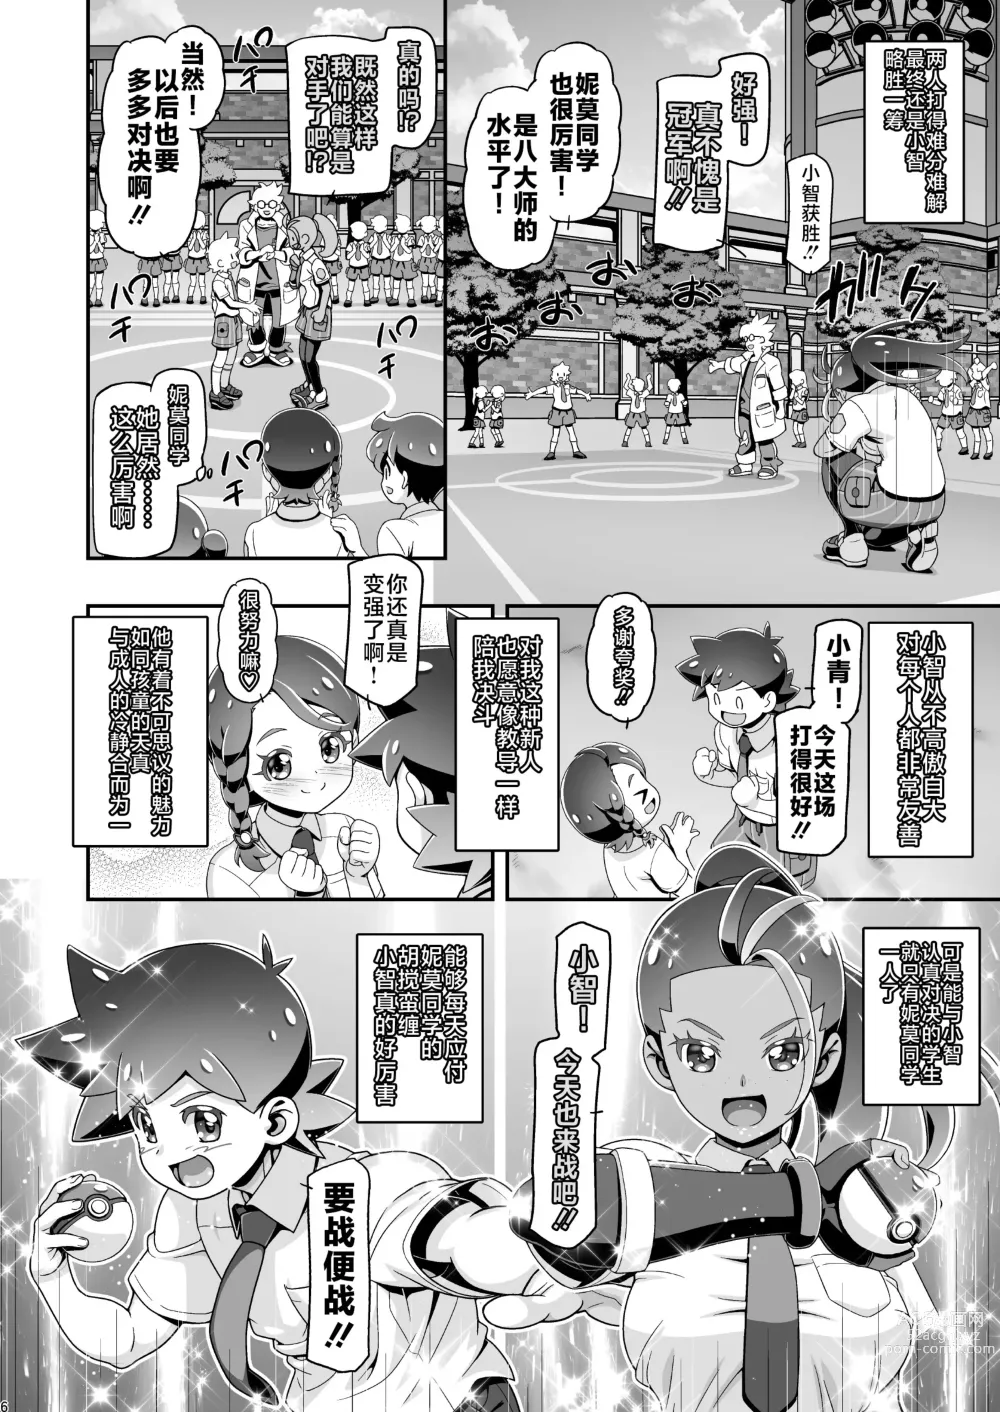 Page 6 of doujinshi ] PM GALS SV Nemo & Aoi